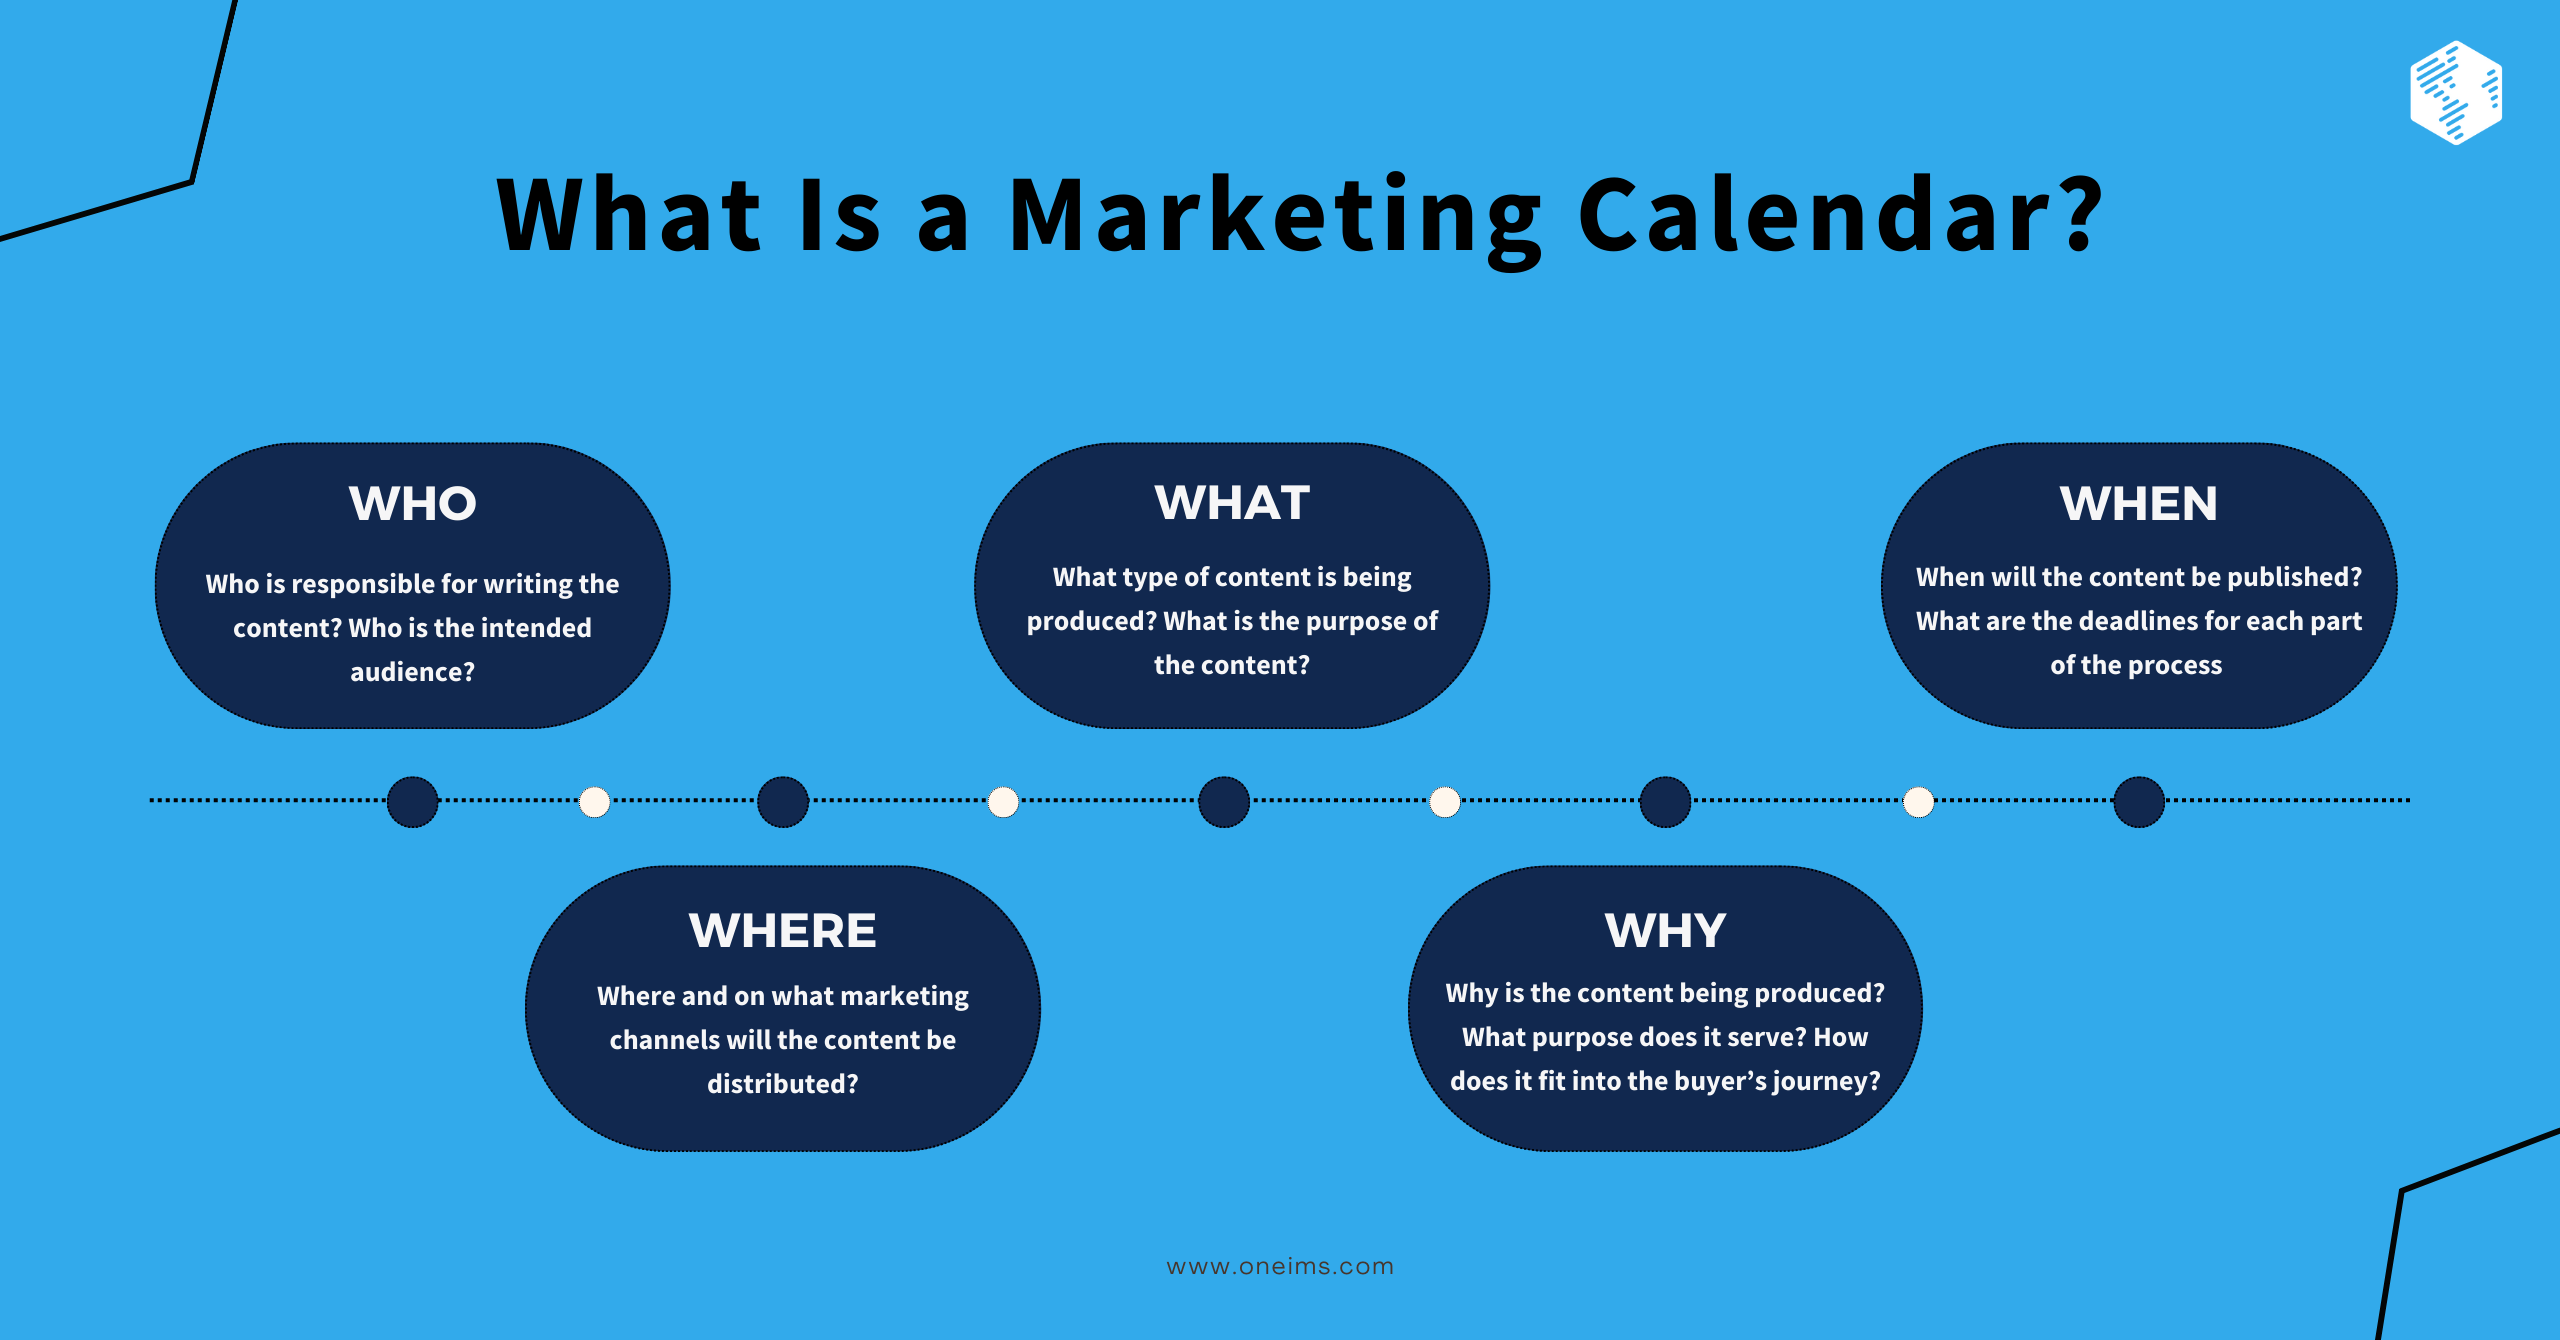 What Is a Marketing Calendar